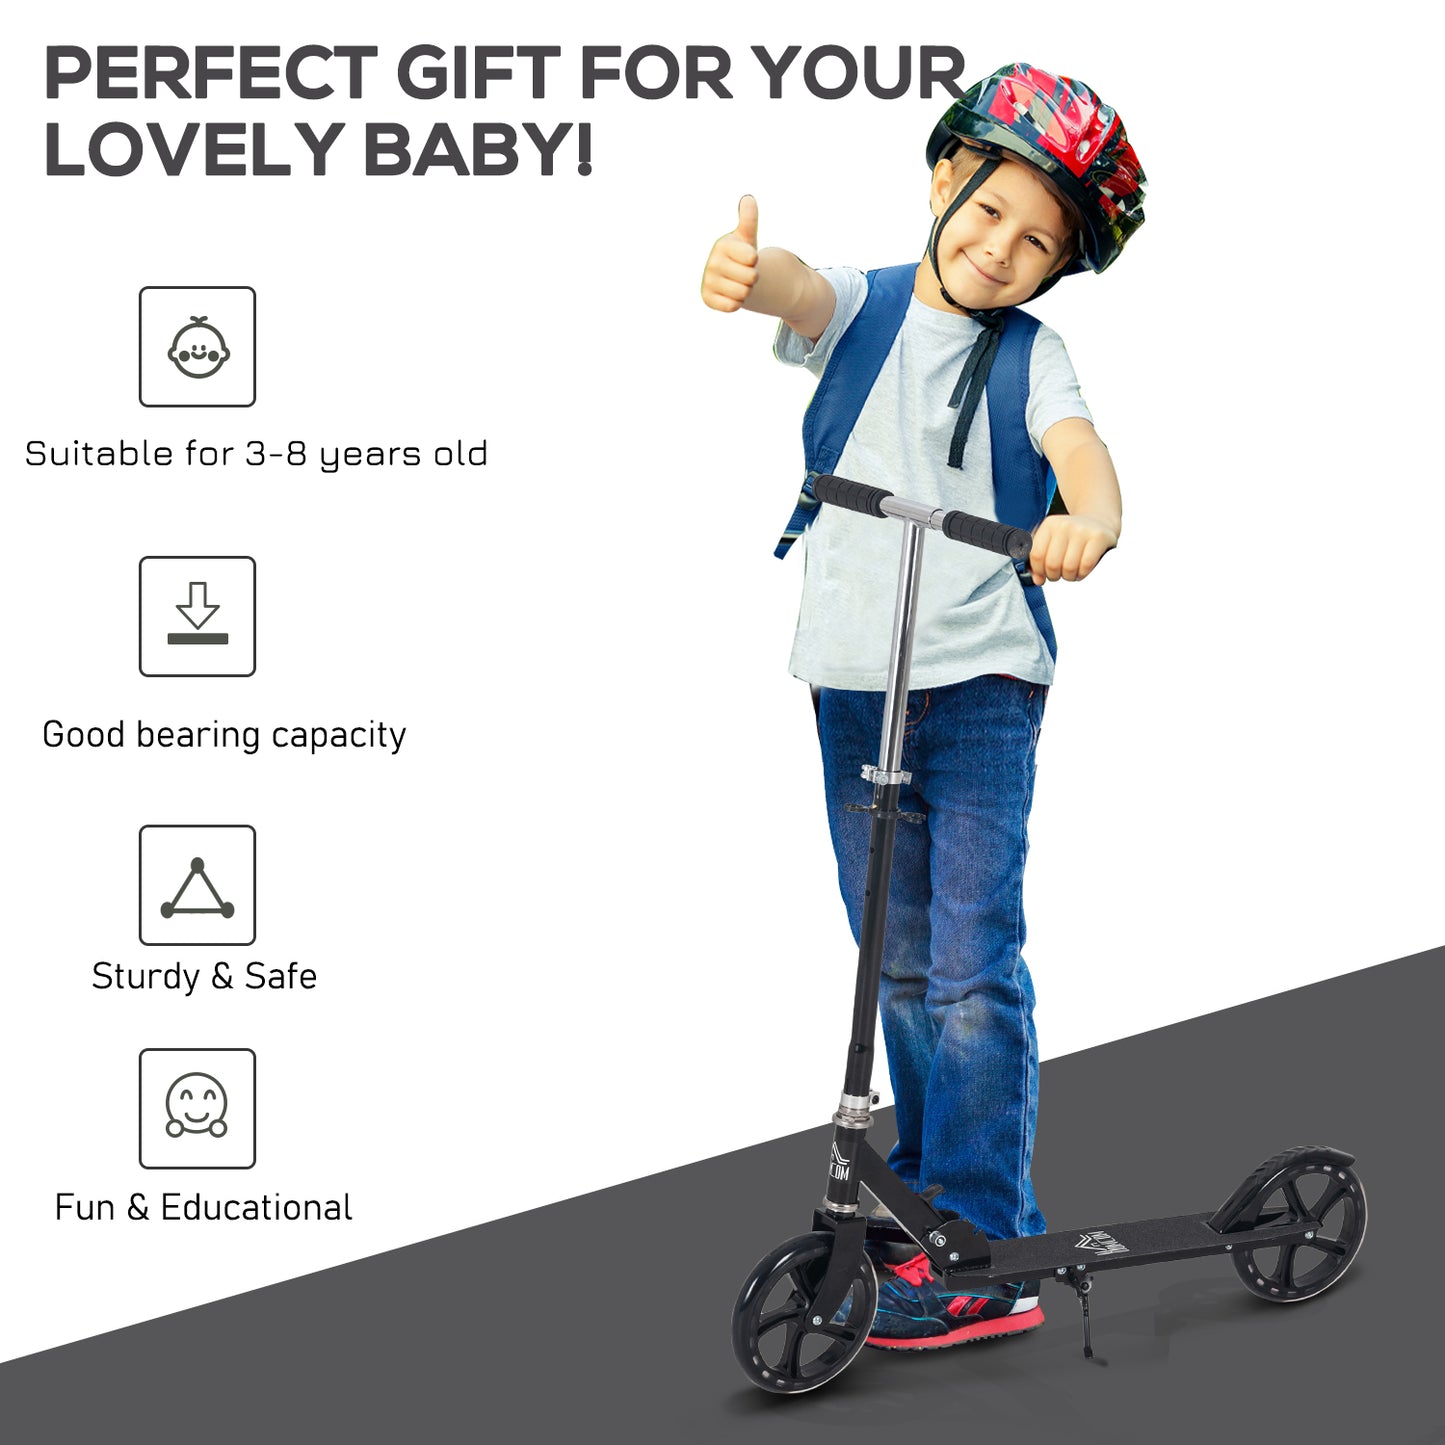 HOMCOM Kids Scooter Height Adjustable Foldable Design Teens Ride On Toy Black